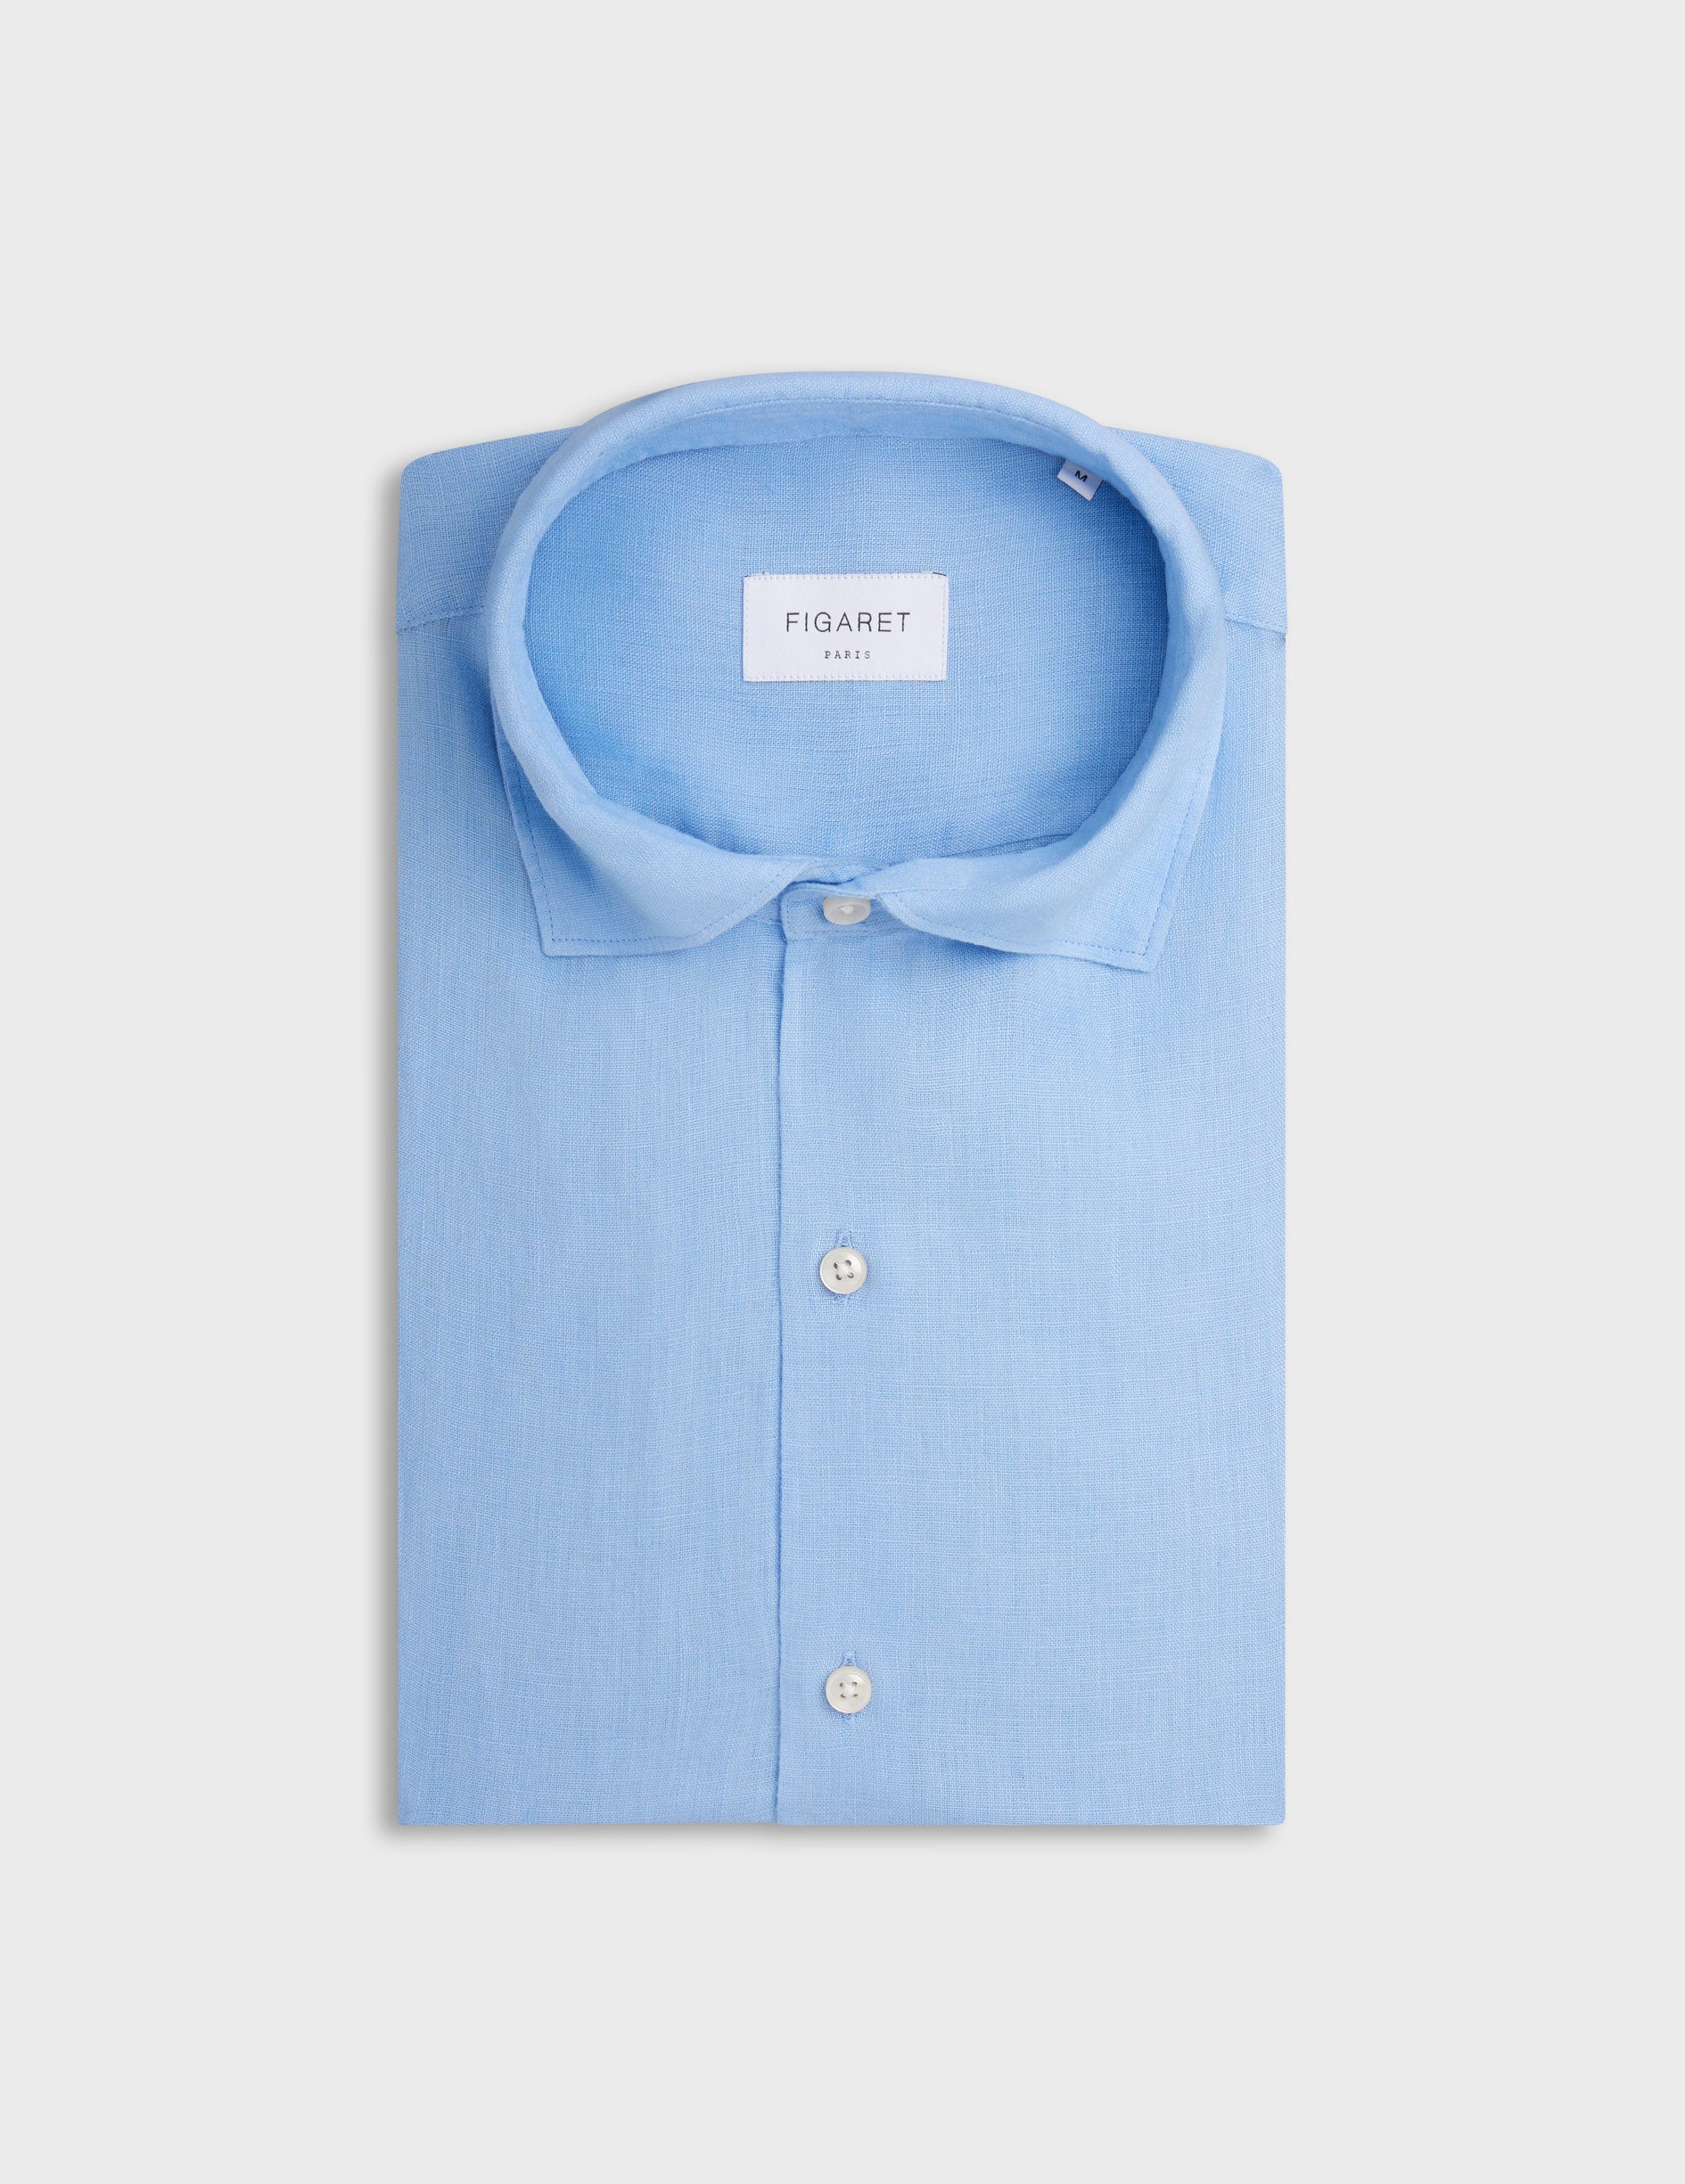 Aristote shirt in light blue linen - Linen - Italian Collar